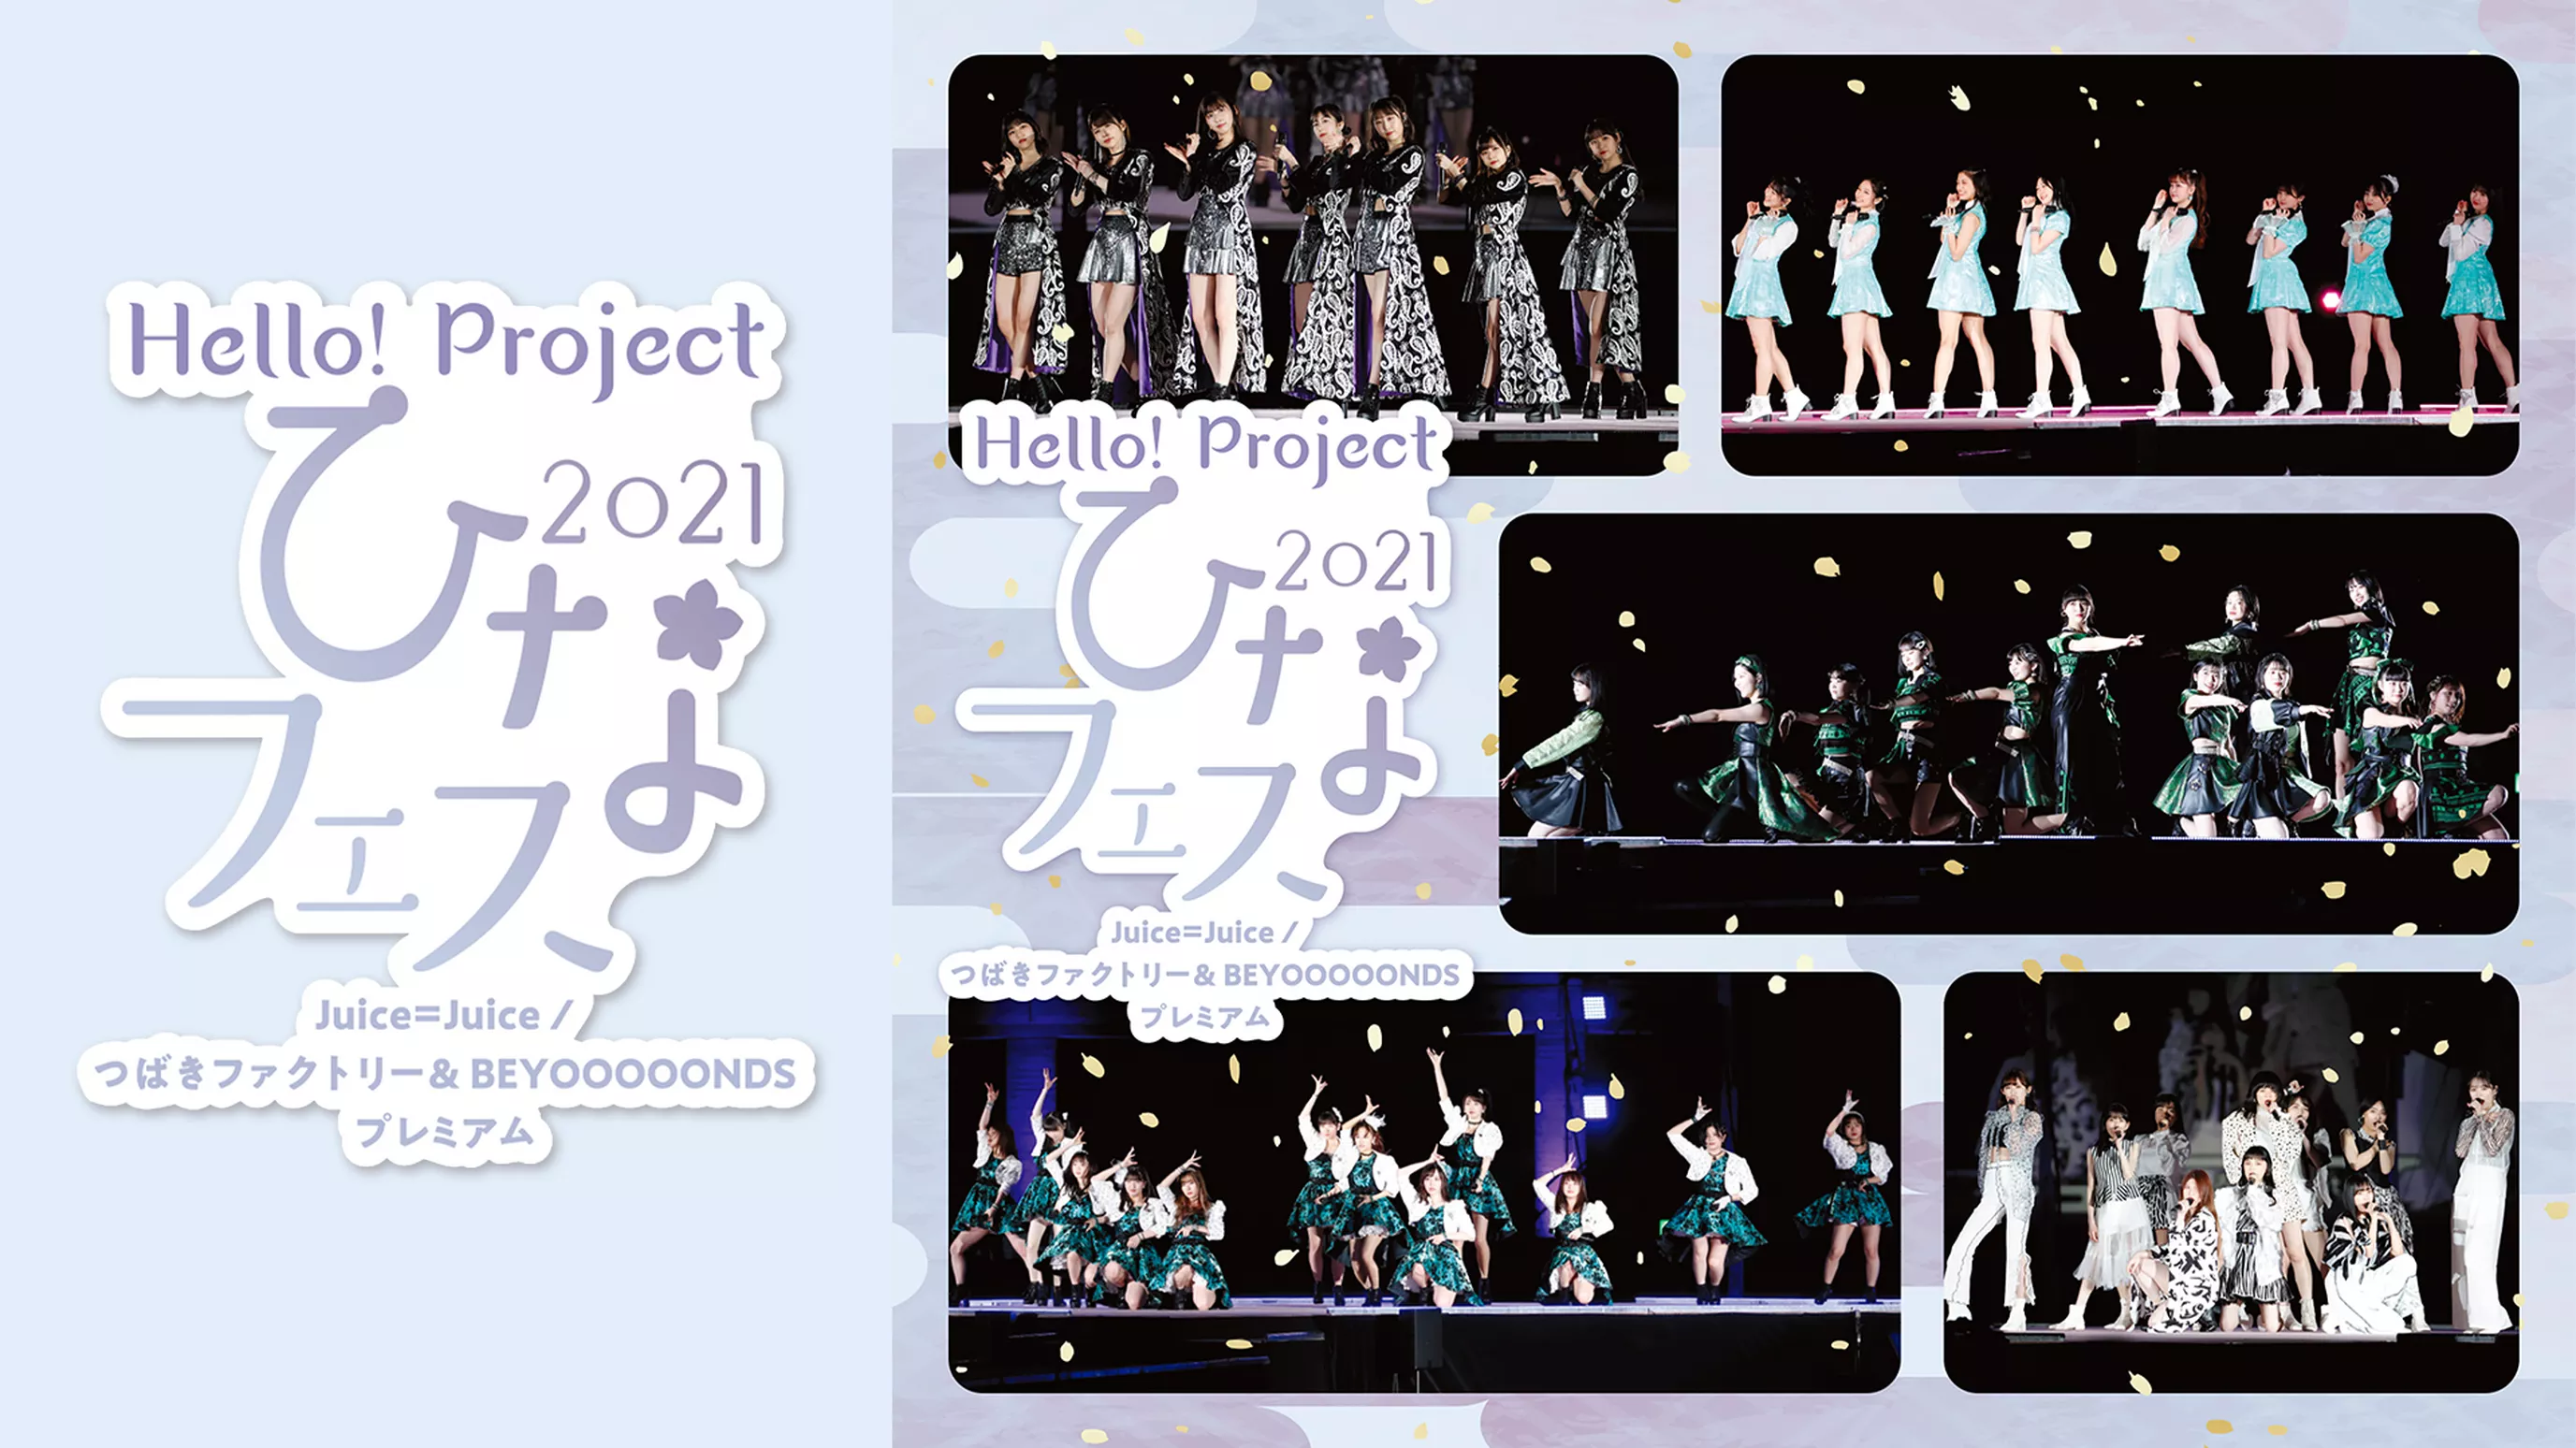 Hello! Project ひなフェス 2021 【Juice=Juice / つばきファクトリー & BEYOOOOONDS プレミアム】